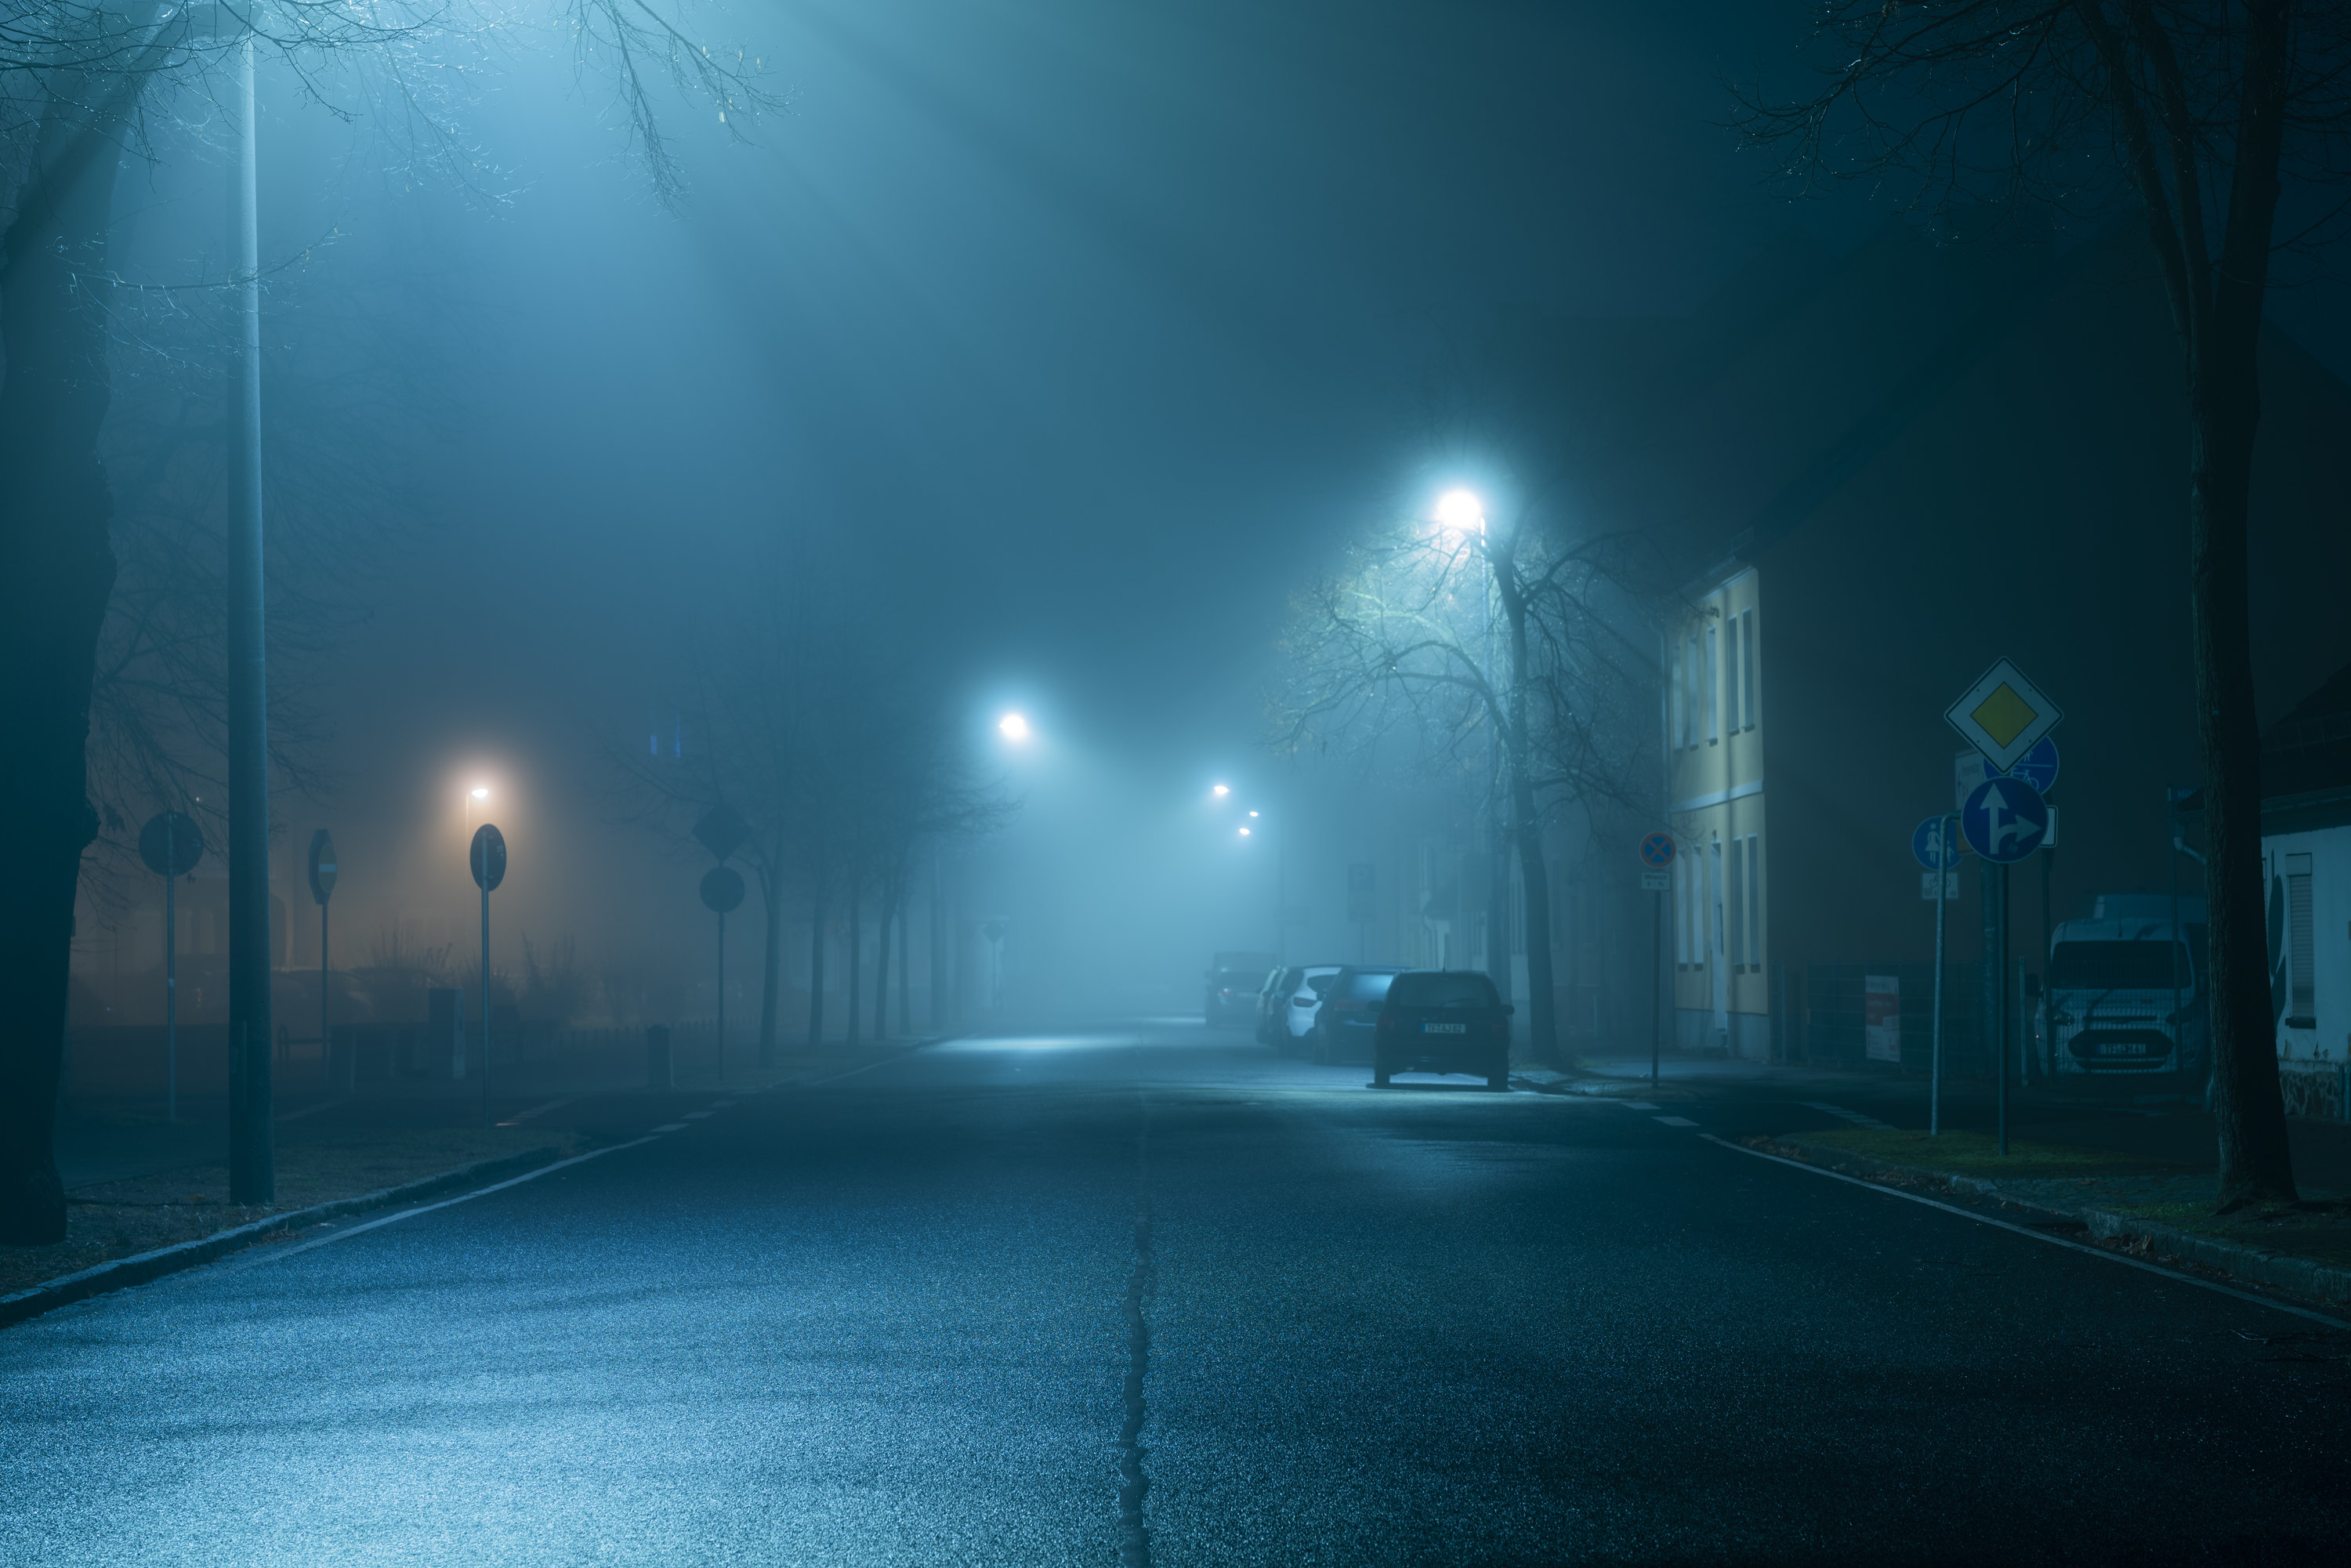 A dark, spooky empty street at night